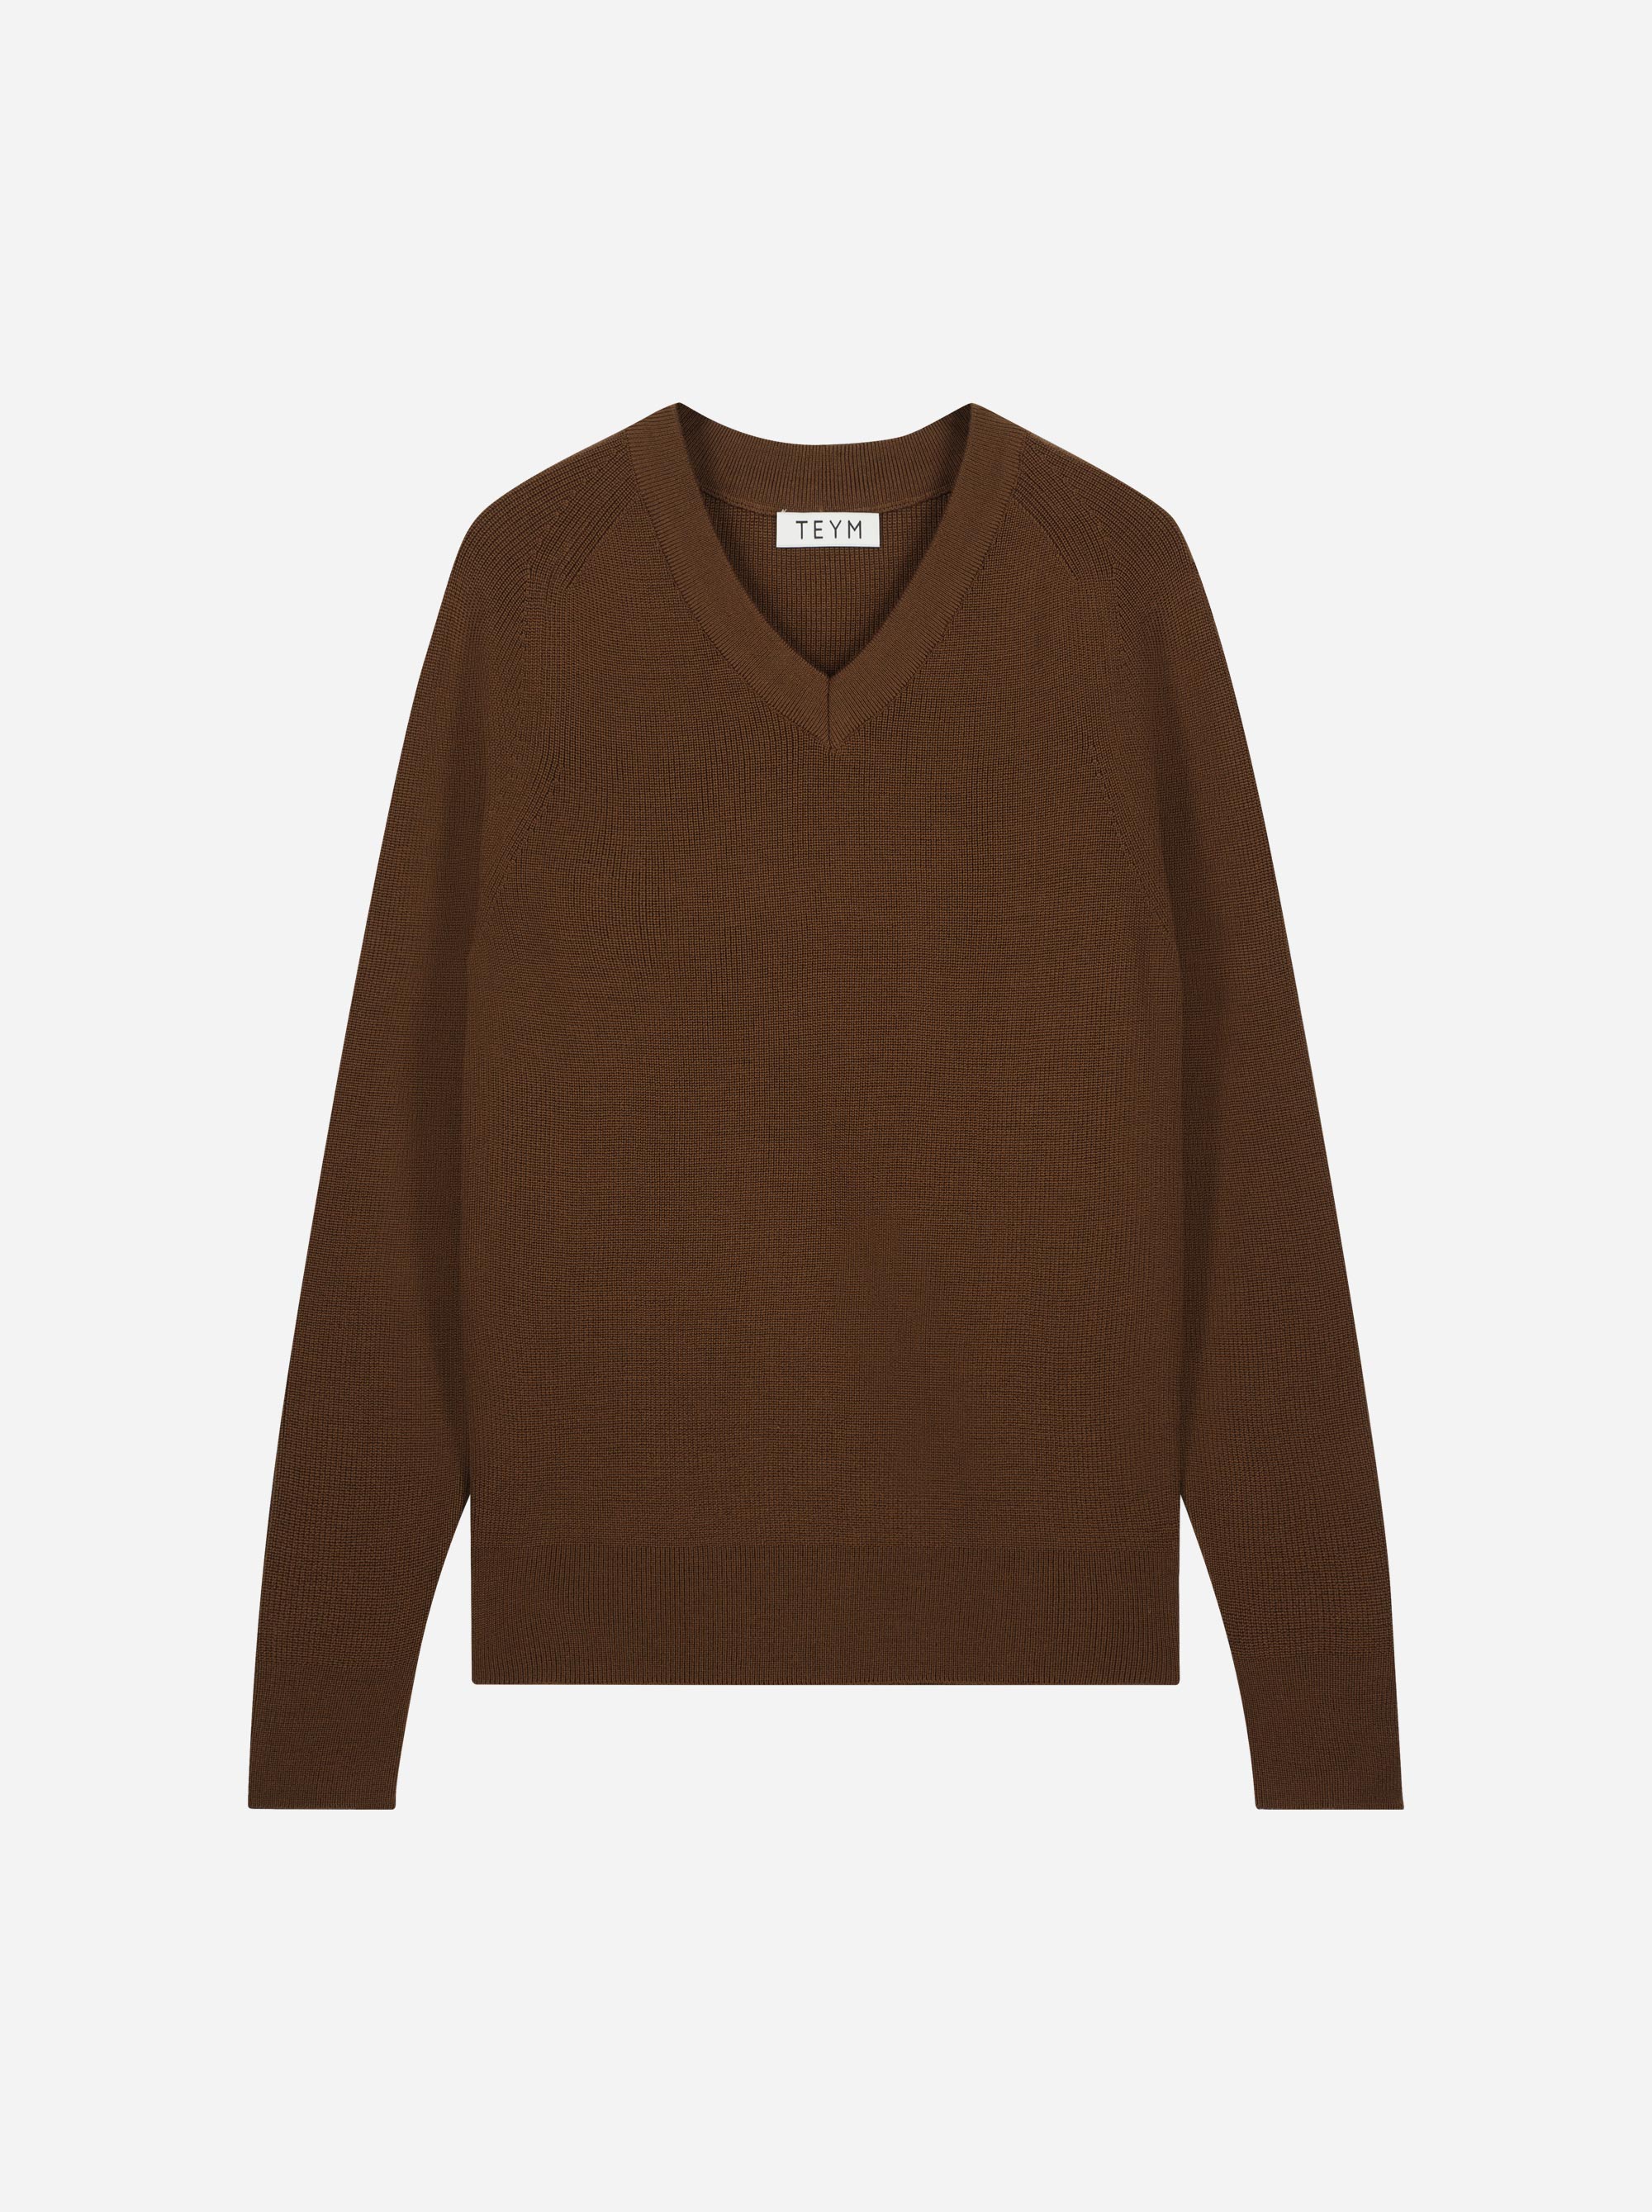 Teym_Merino-Sweater-V-Neck_Dark_Brown_front_1